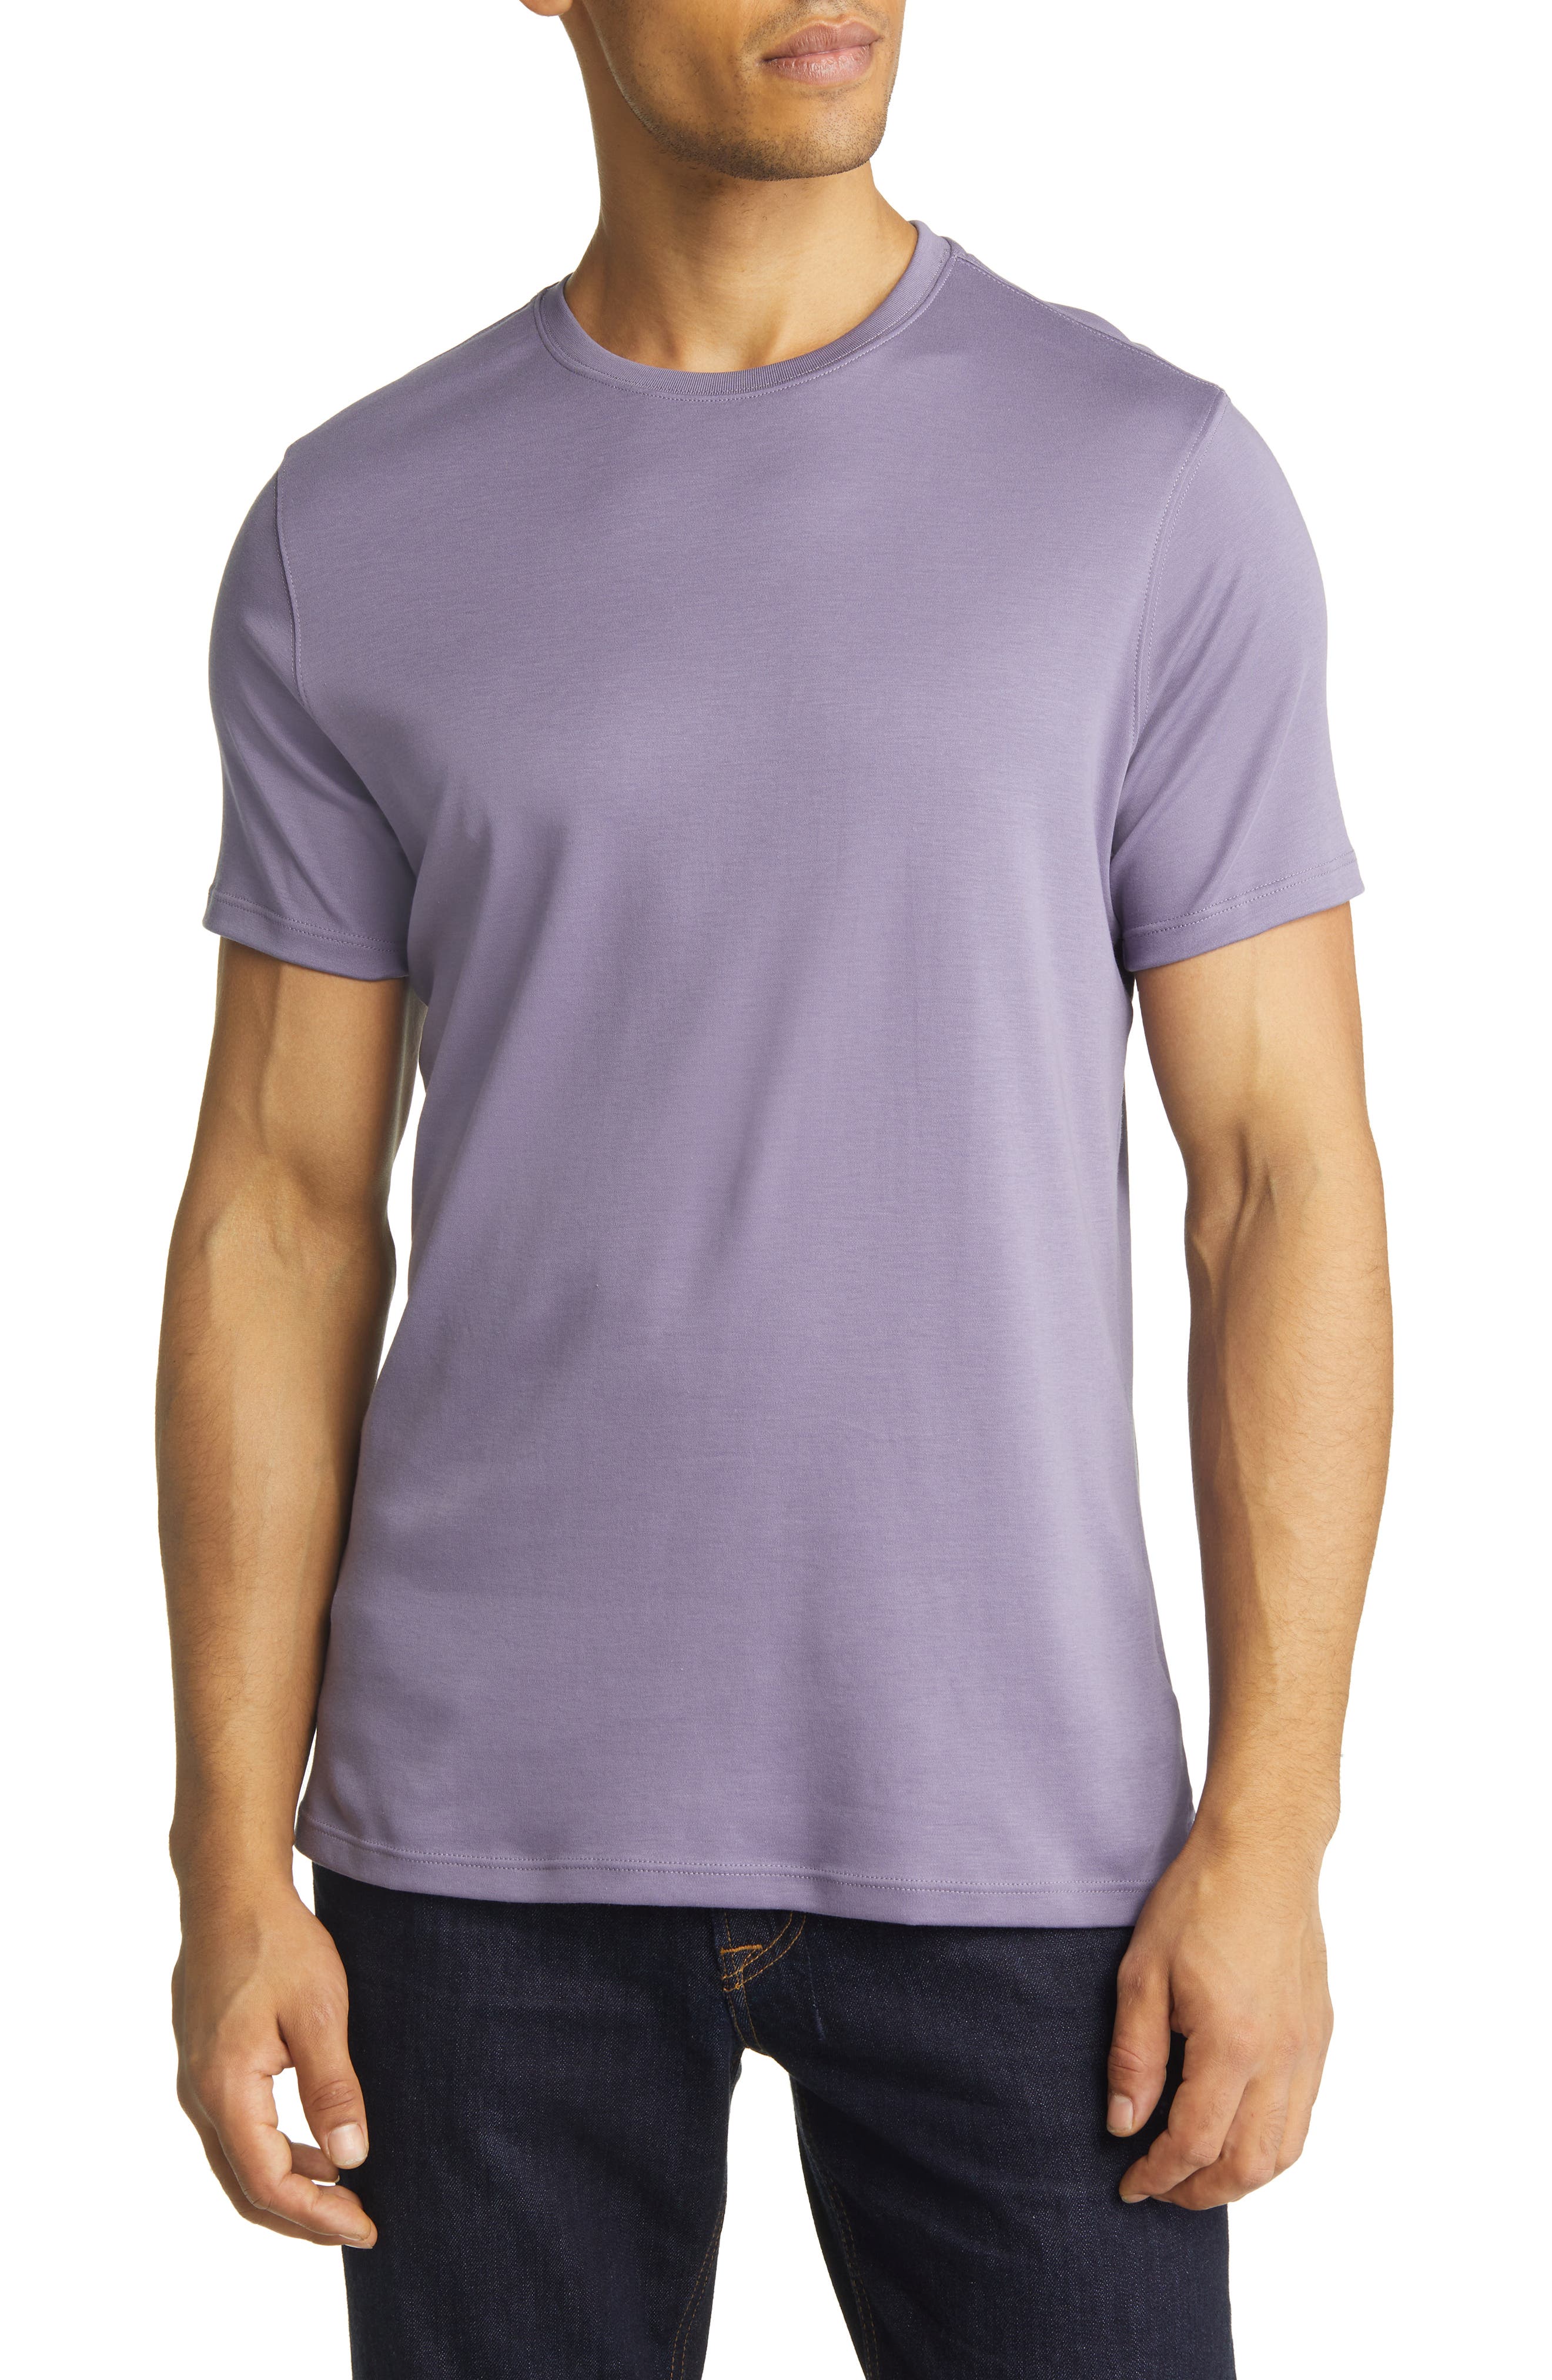 MEN FASHION Shirts & T-shirts Casual discount 65% Pull&Bear T-shirt Purple S 